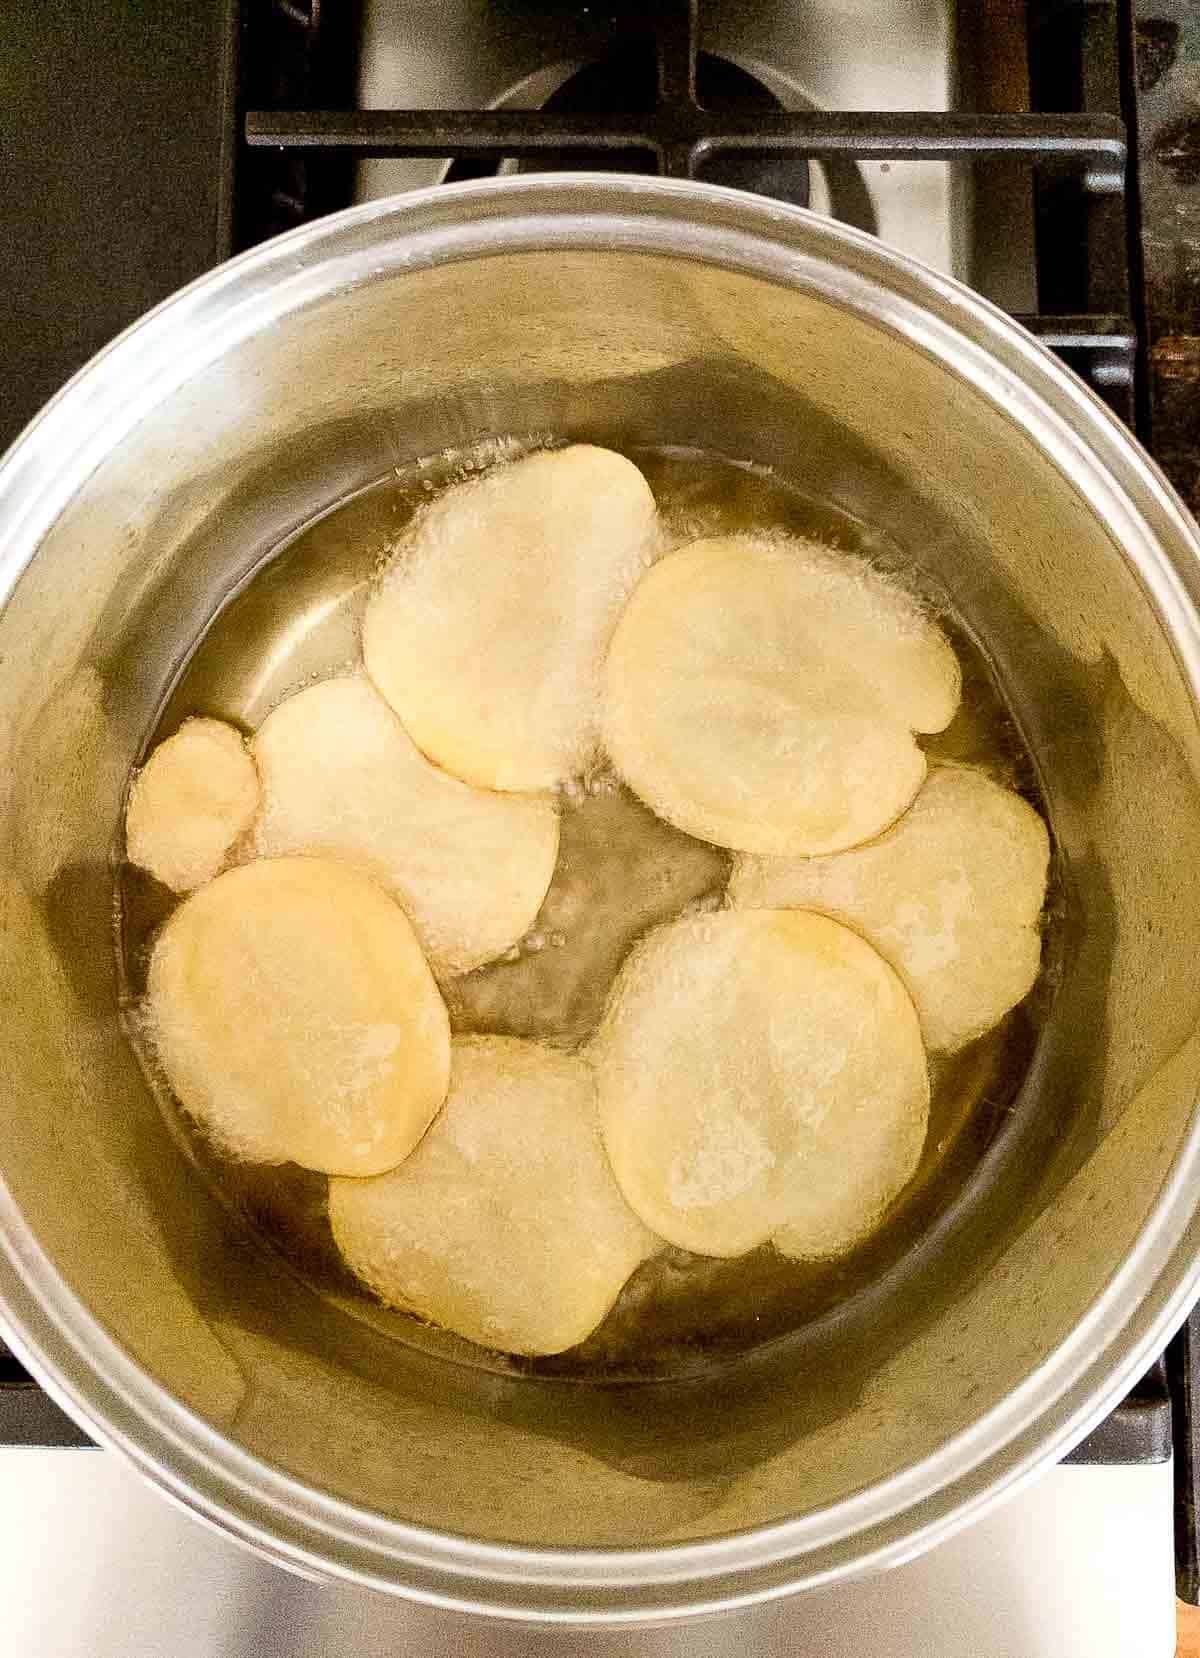 potato slices frying in hot oil.